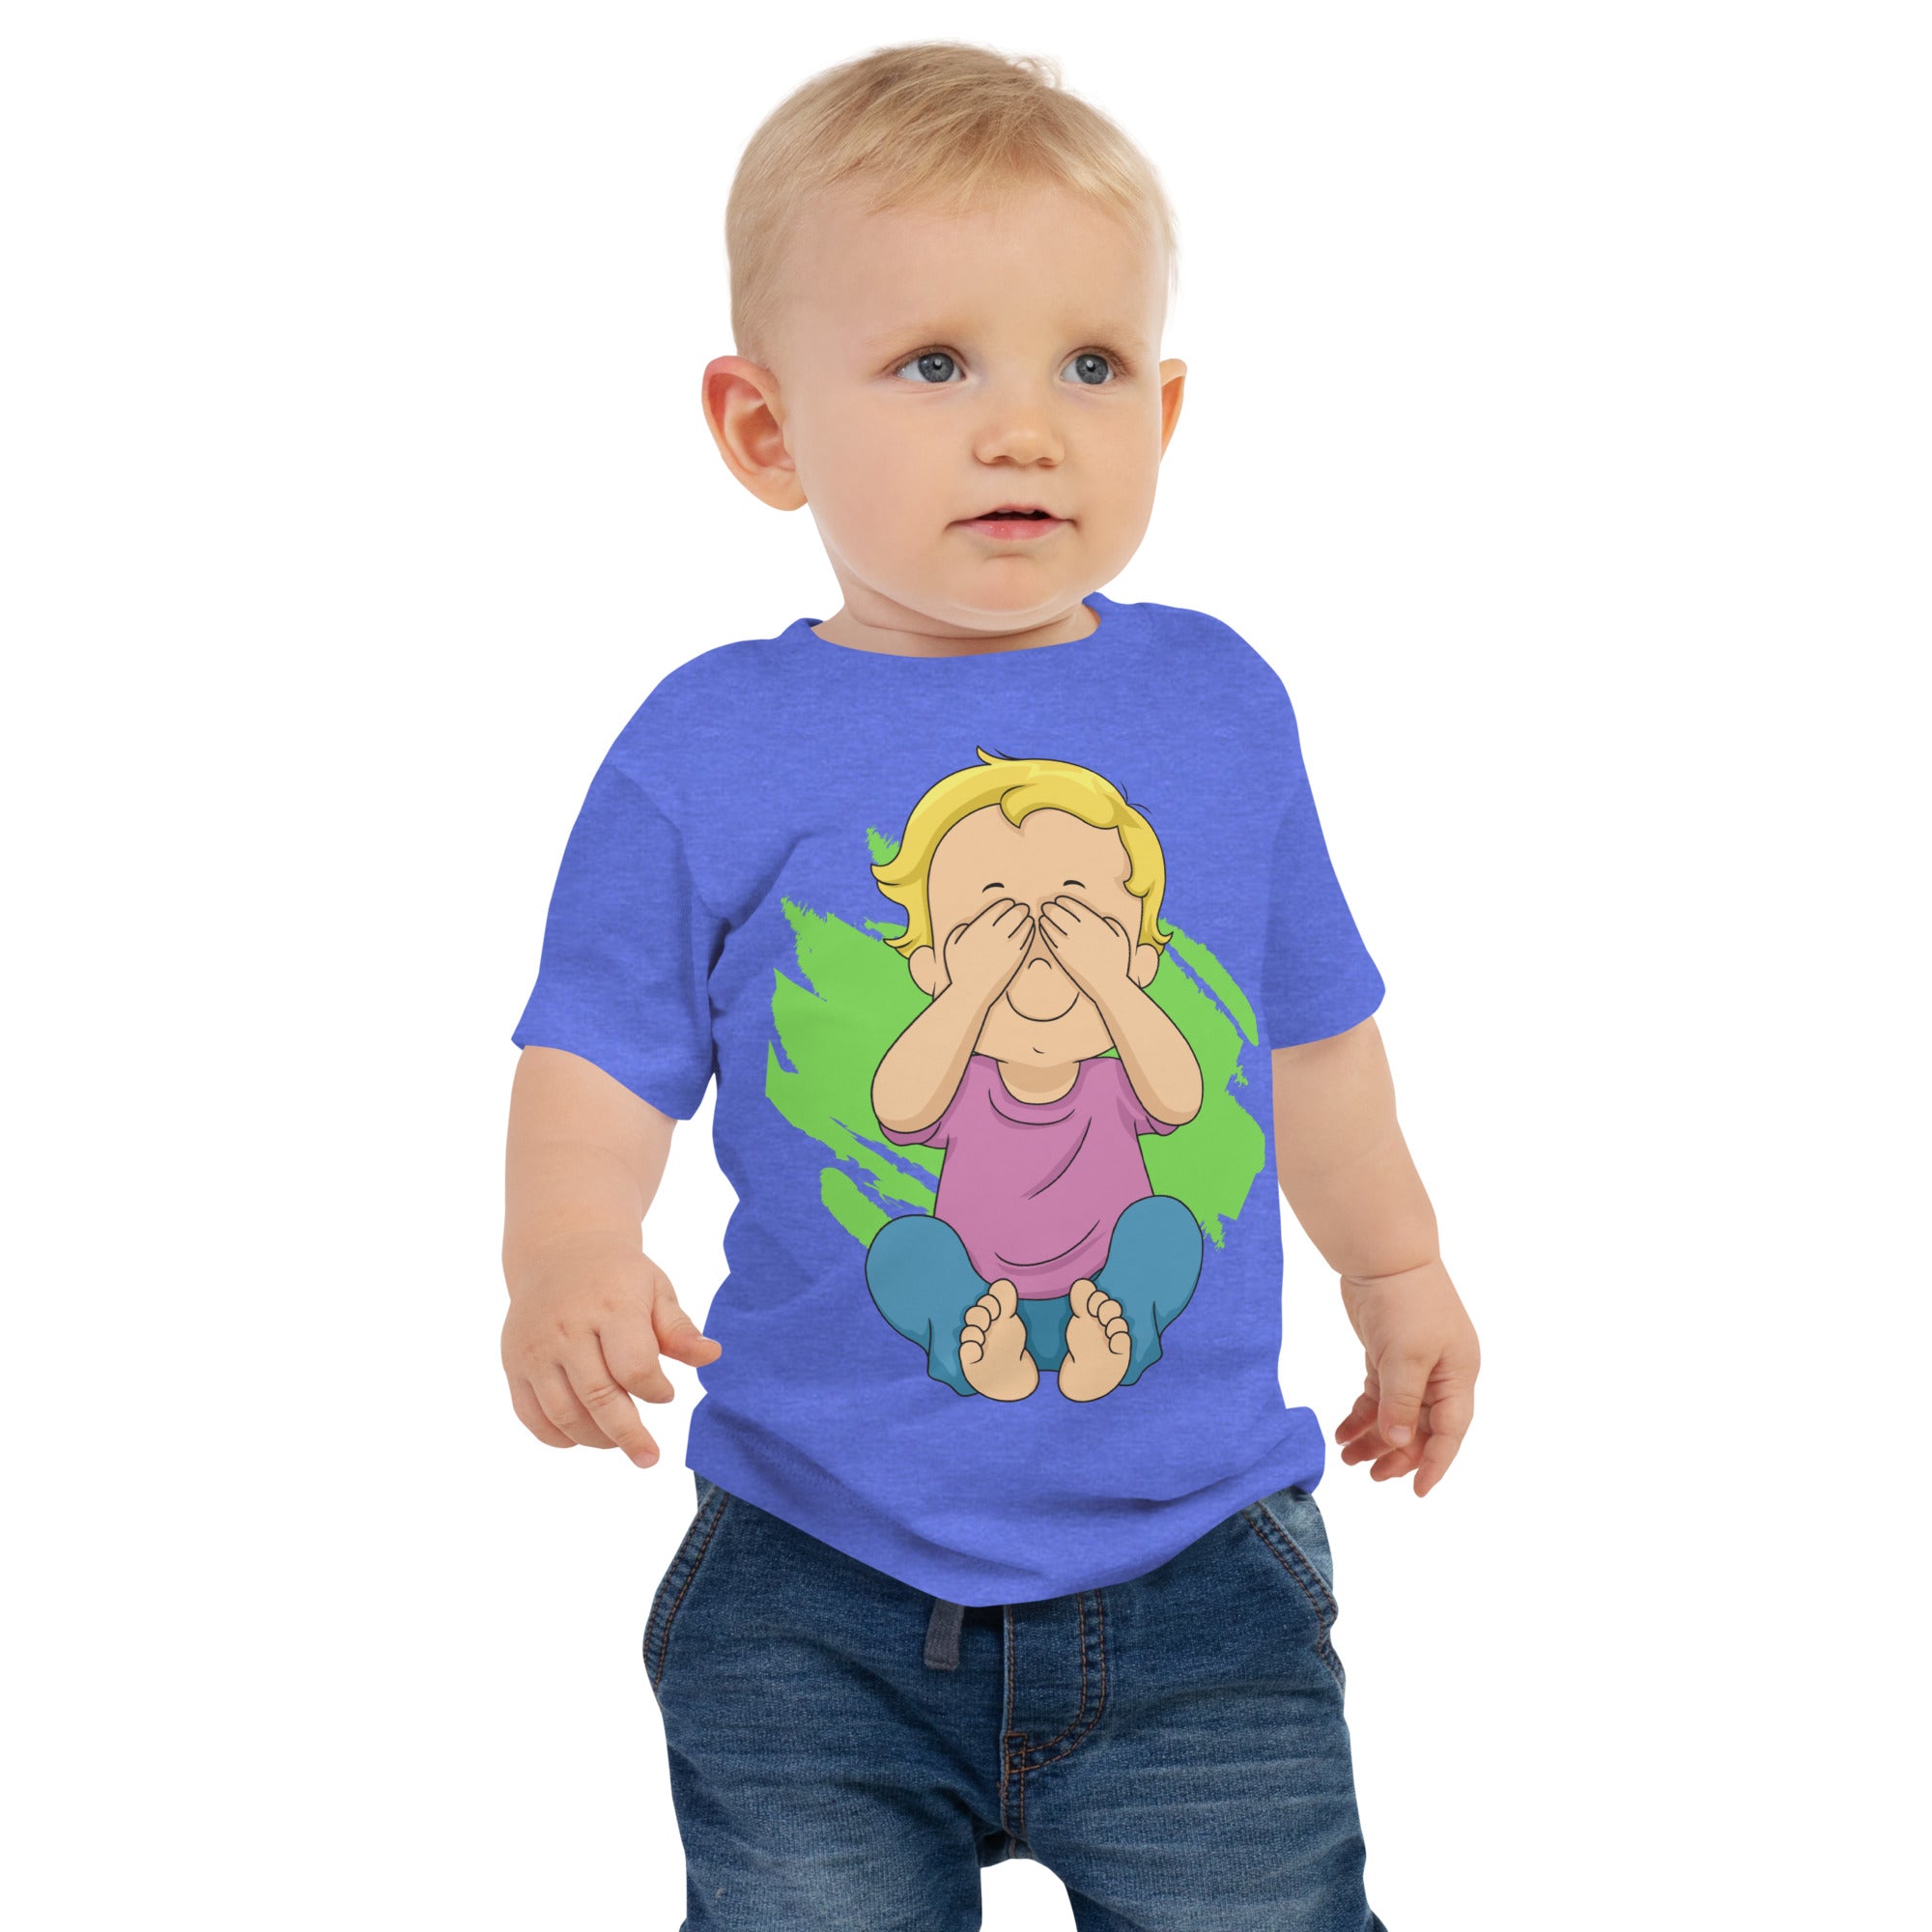 Camiseta de manga corta de jersey para bebé - Peekaboo (Colores)